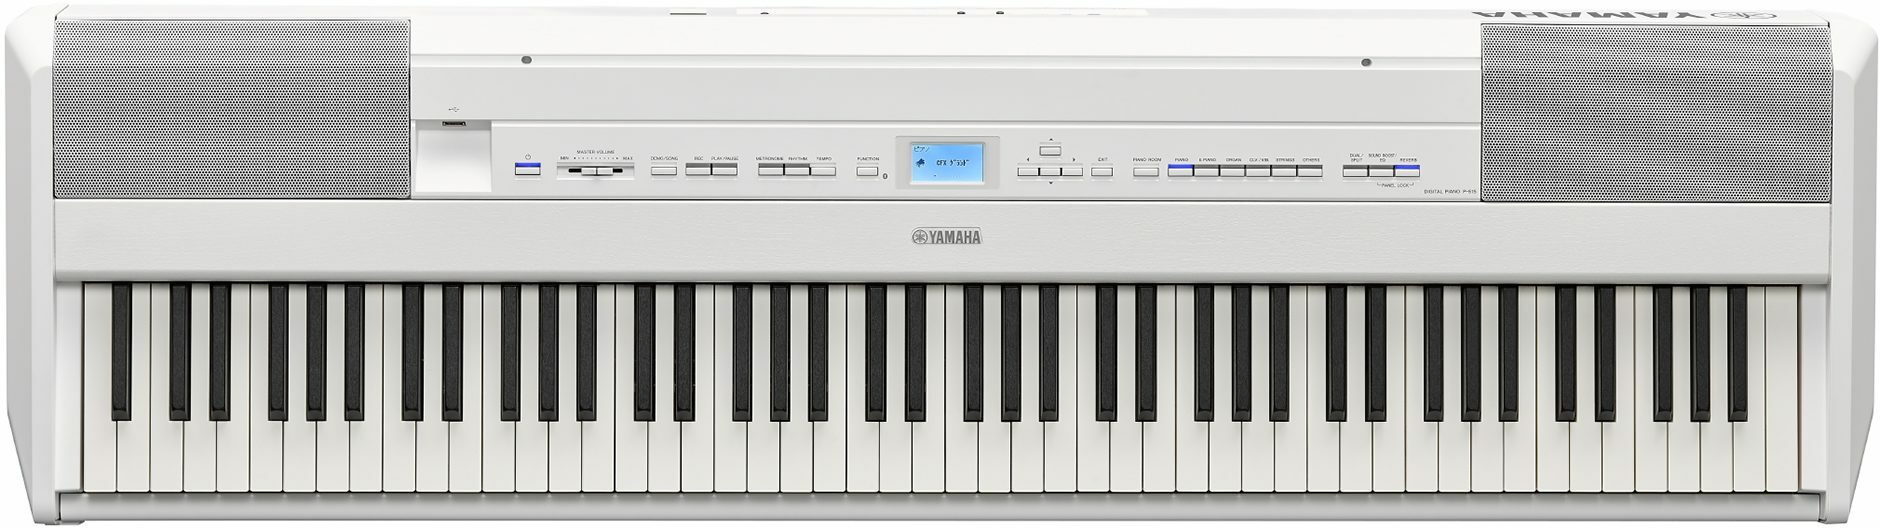 Yamaha P-515w - White - Portable digital piano - Main picture